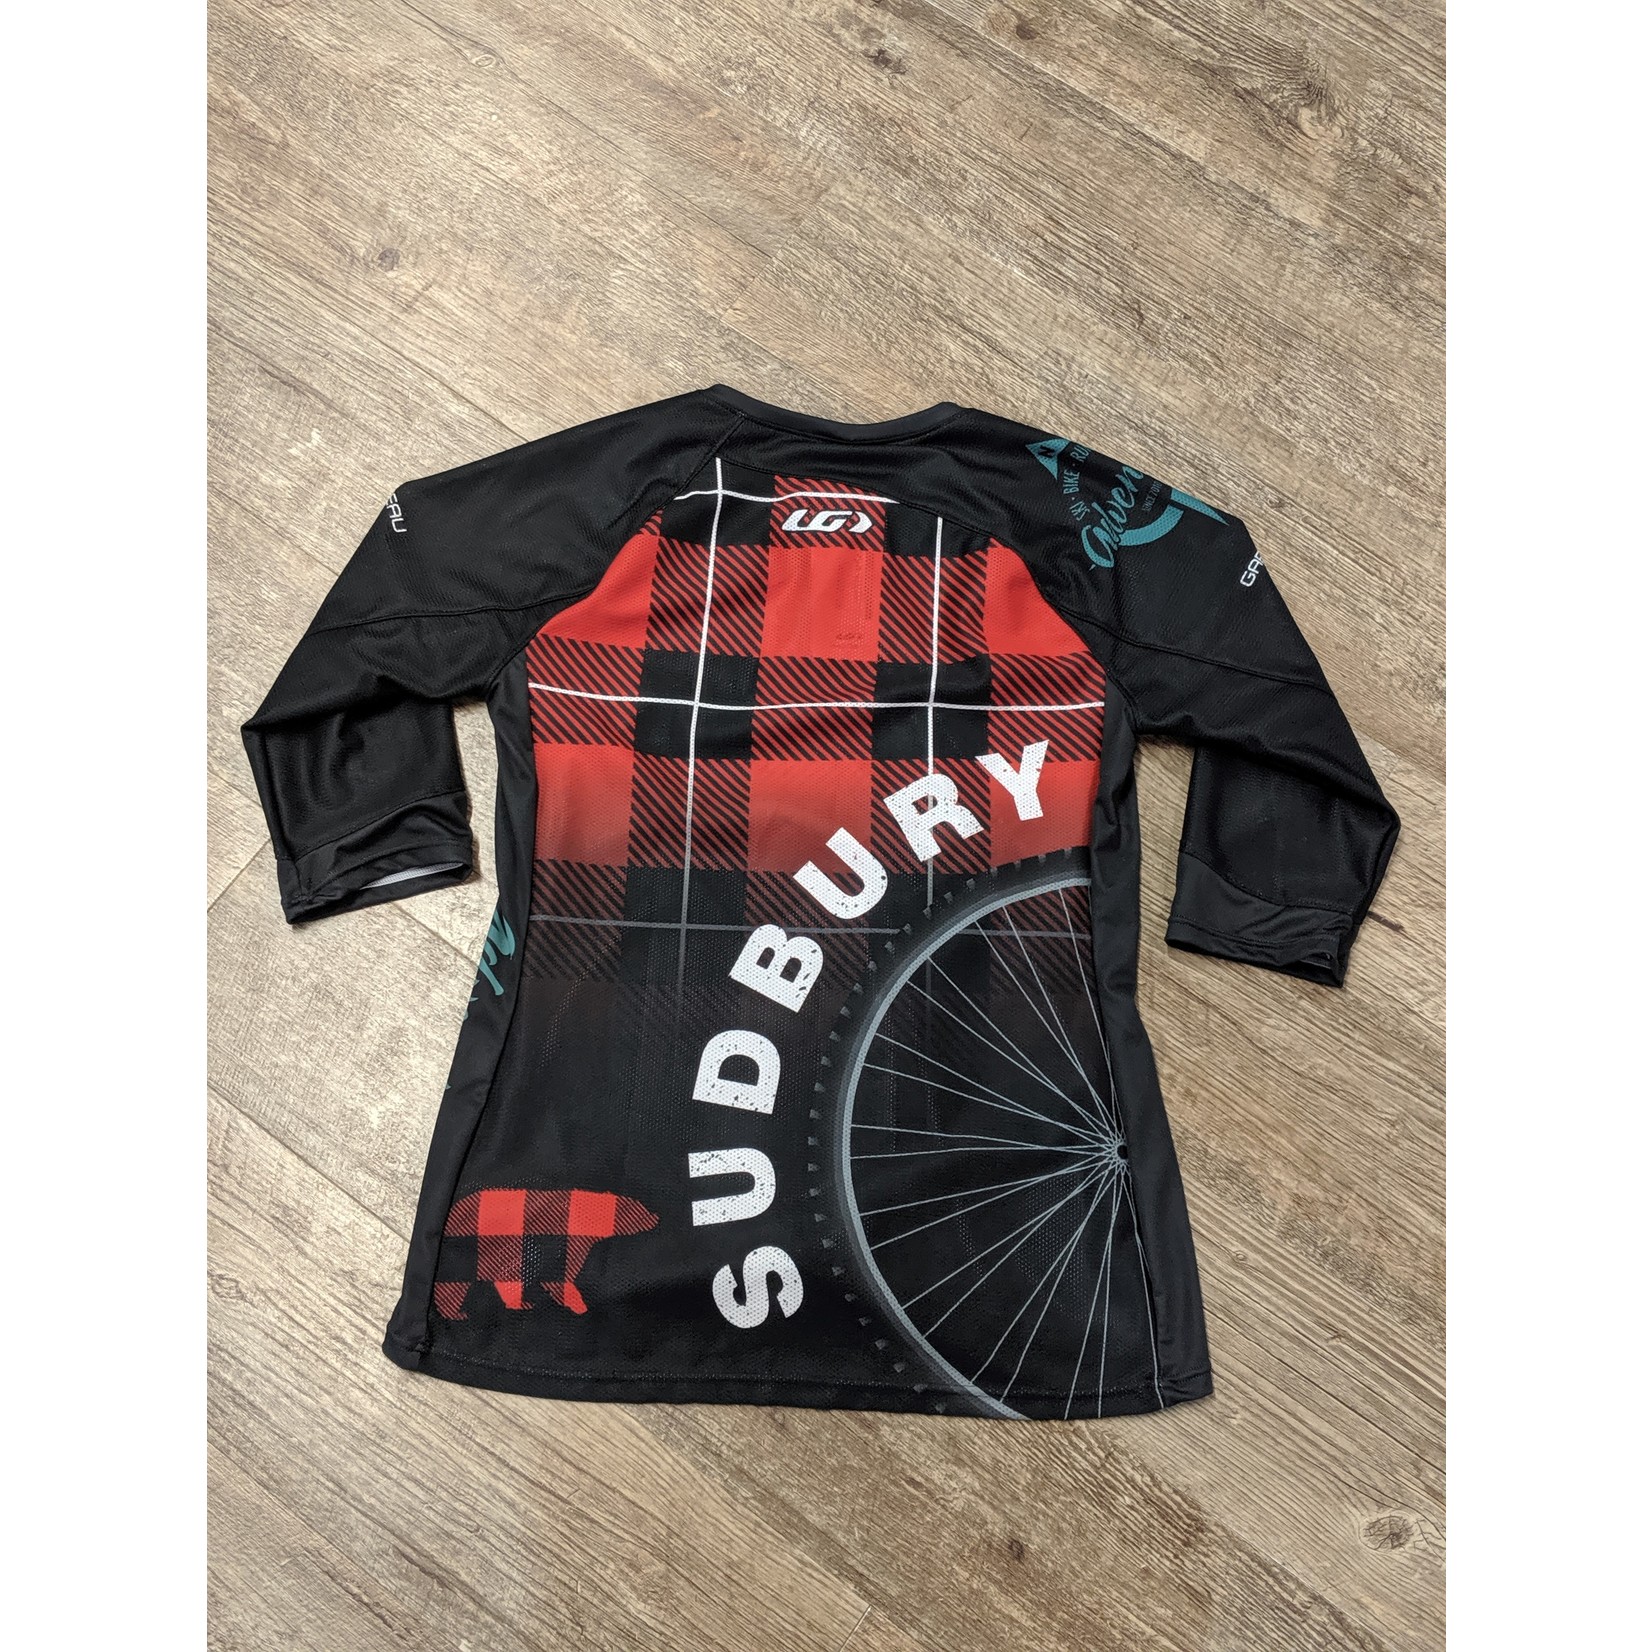 Sudbury Jersey 2019 -Women's  MTB 3/4 Sleeve